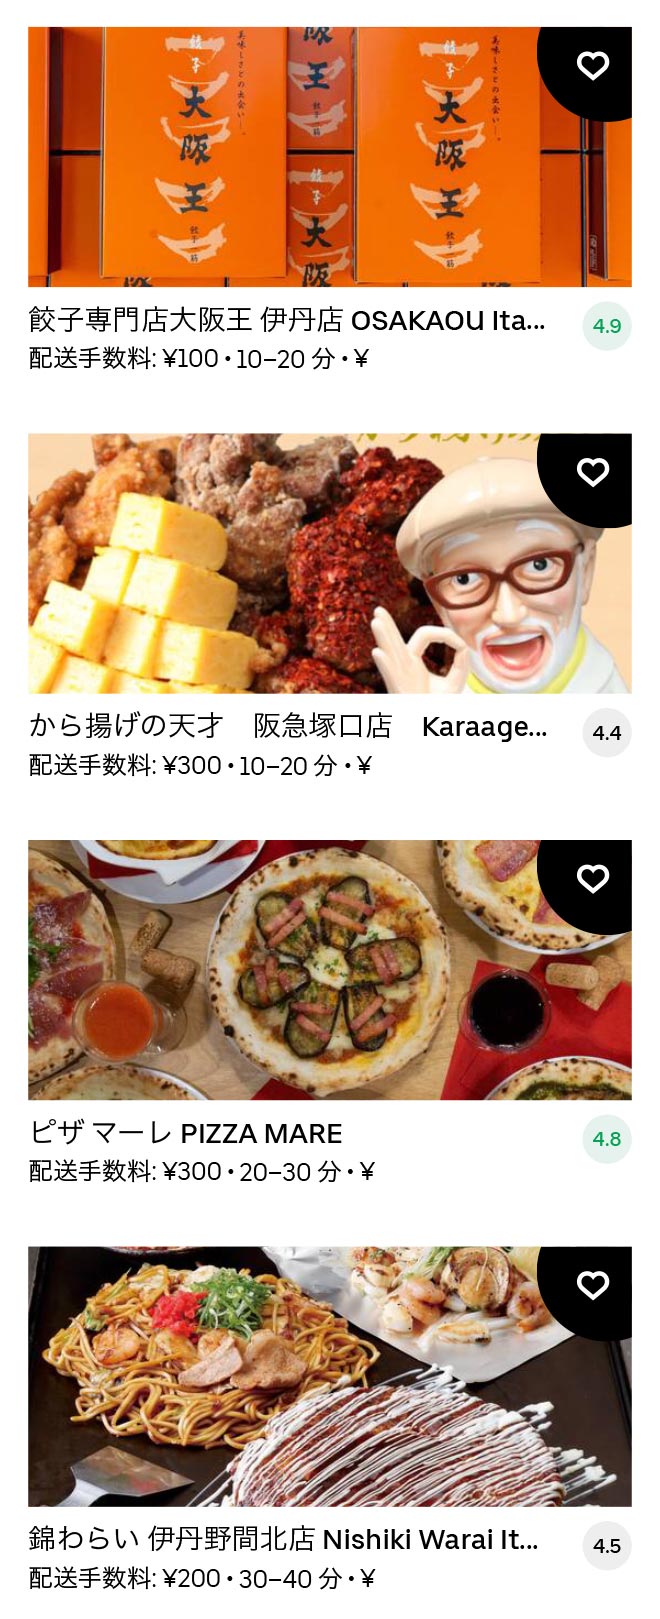 Hankyu itami menu 2011 10